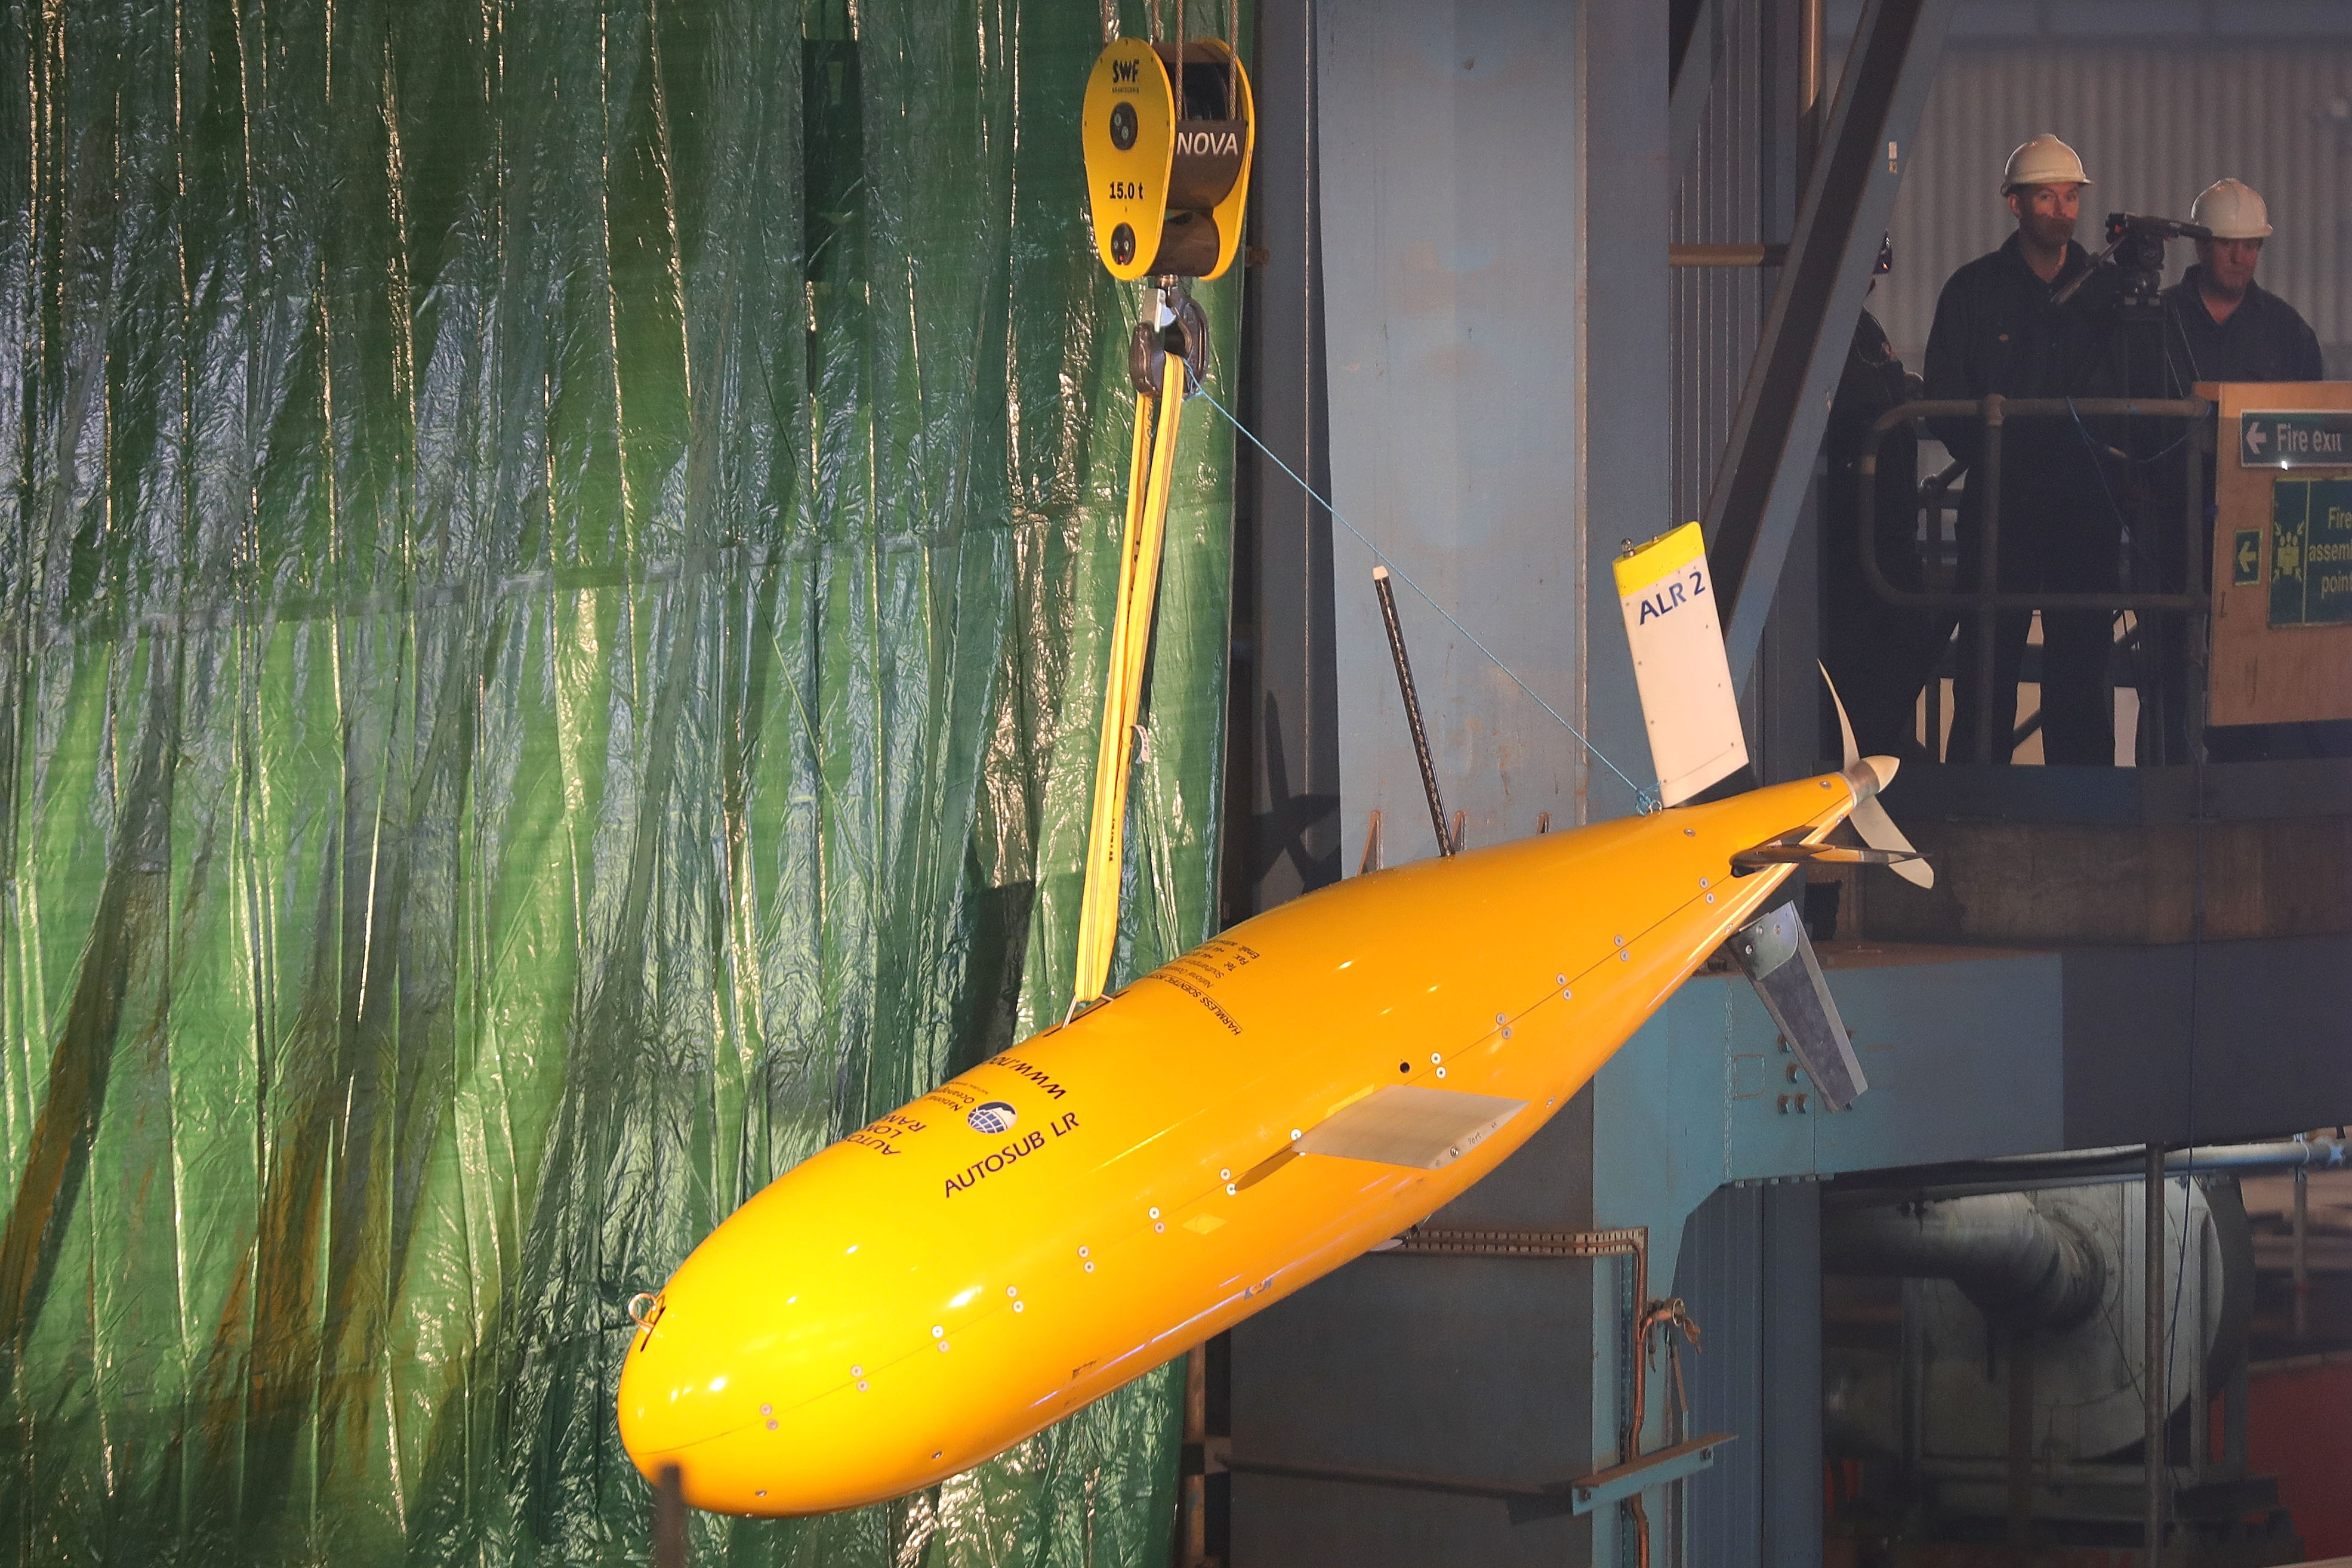 boaty mcboatface unmanned submarine